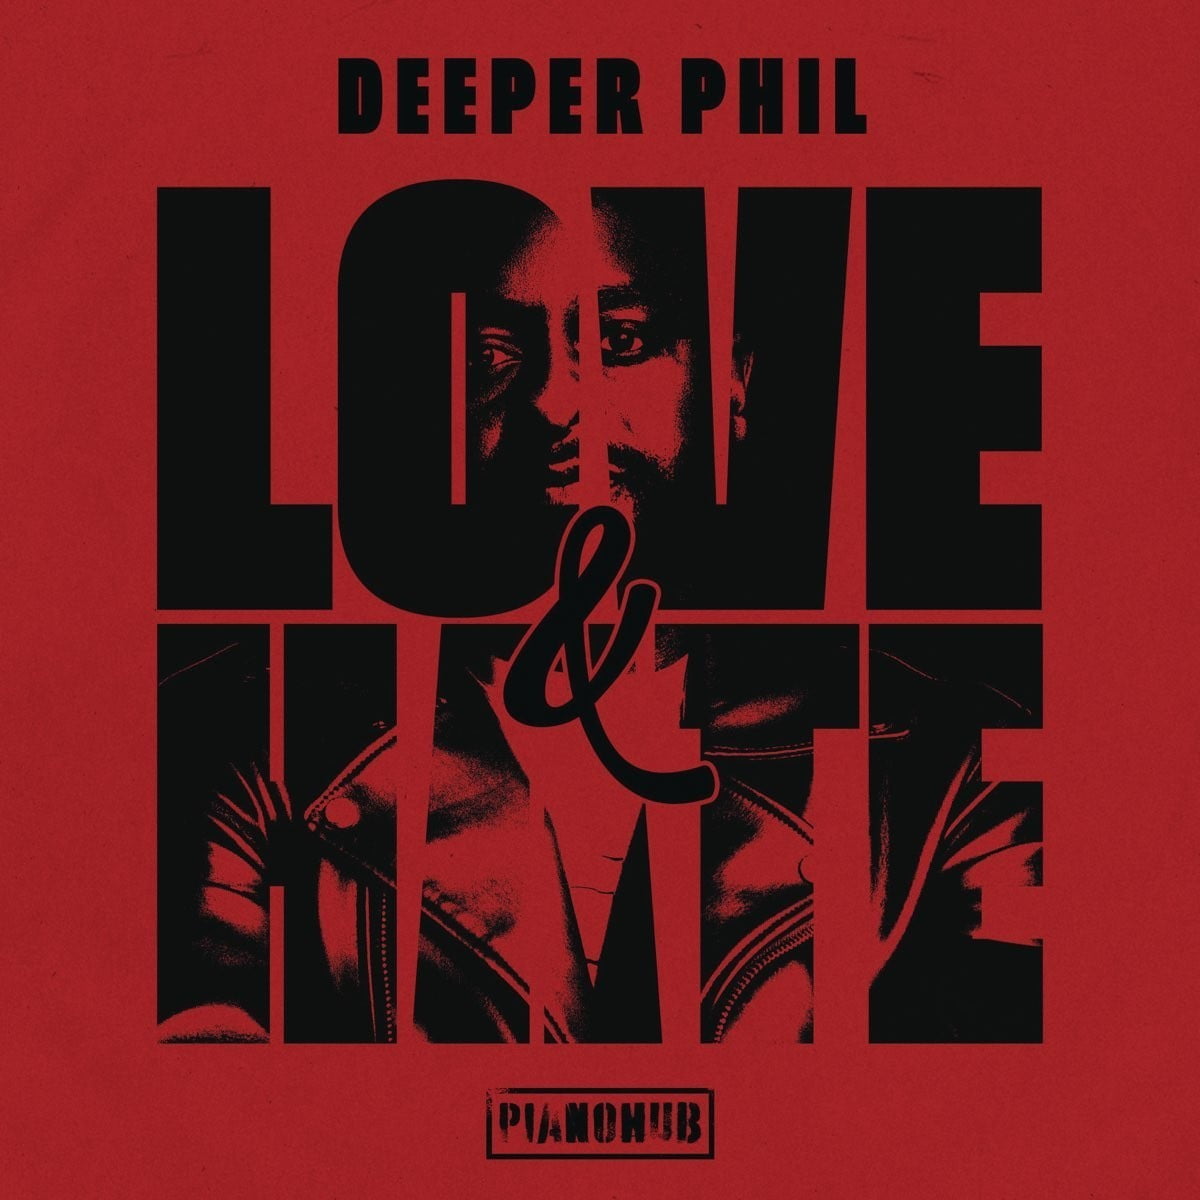 Deeper Phil – Indlebe ft. Tman Xpress & Shino Kikai mp3 download free lyrics